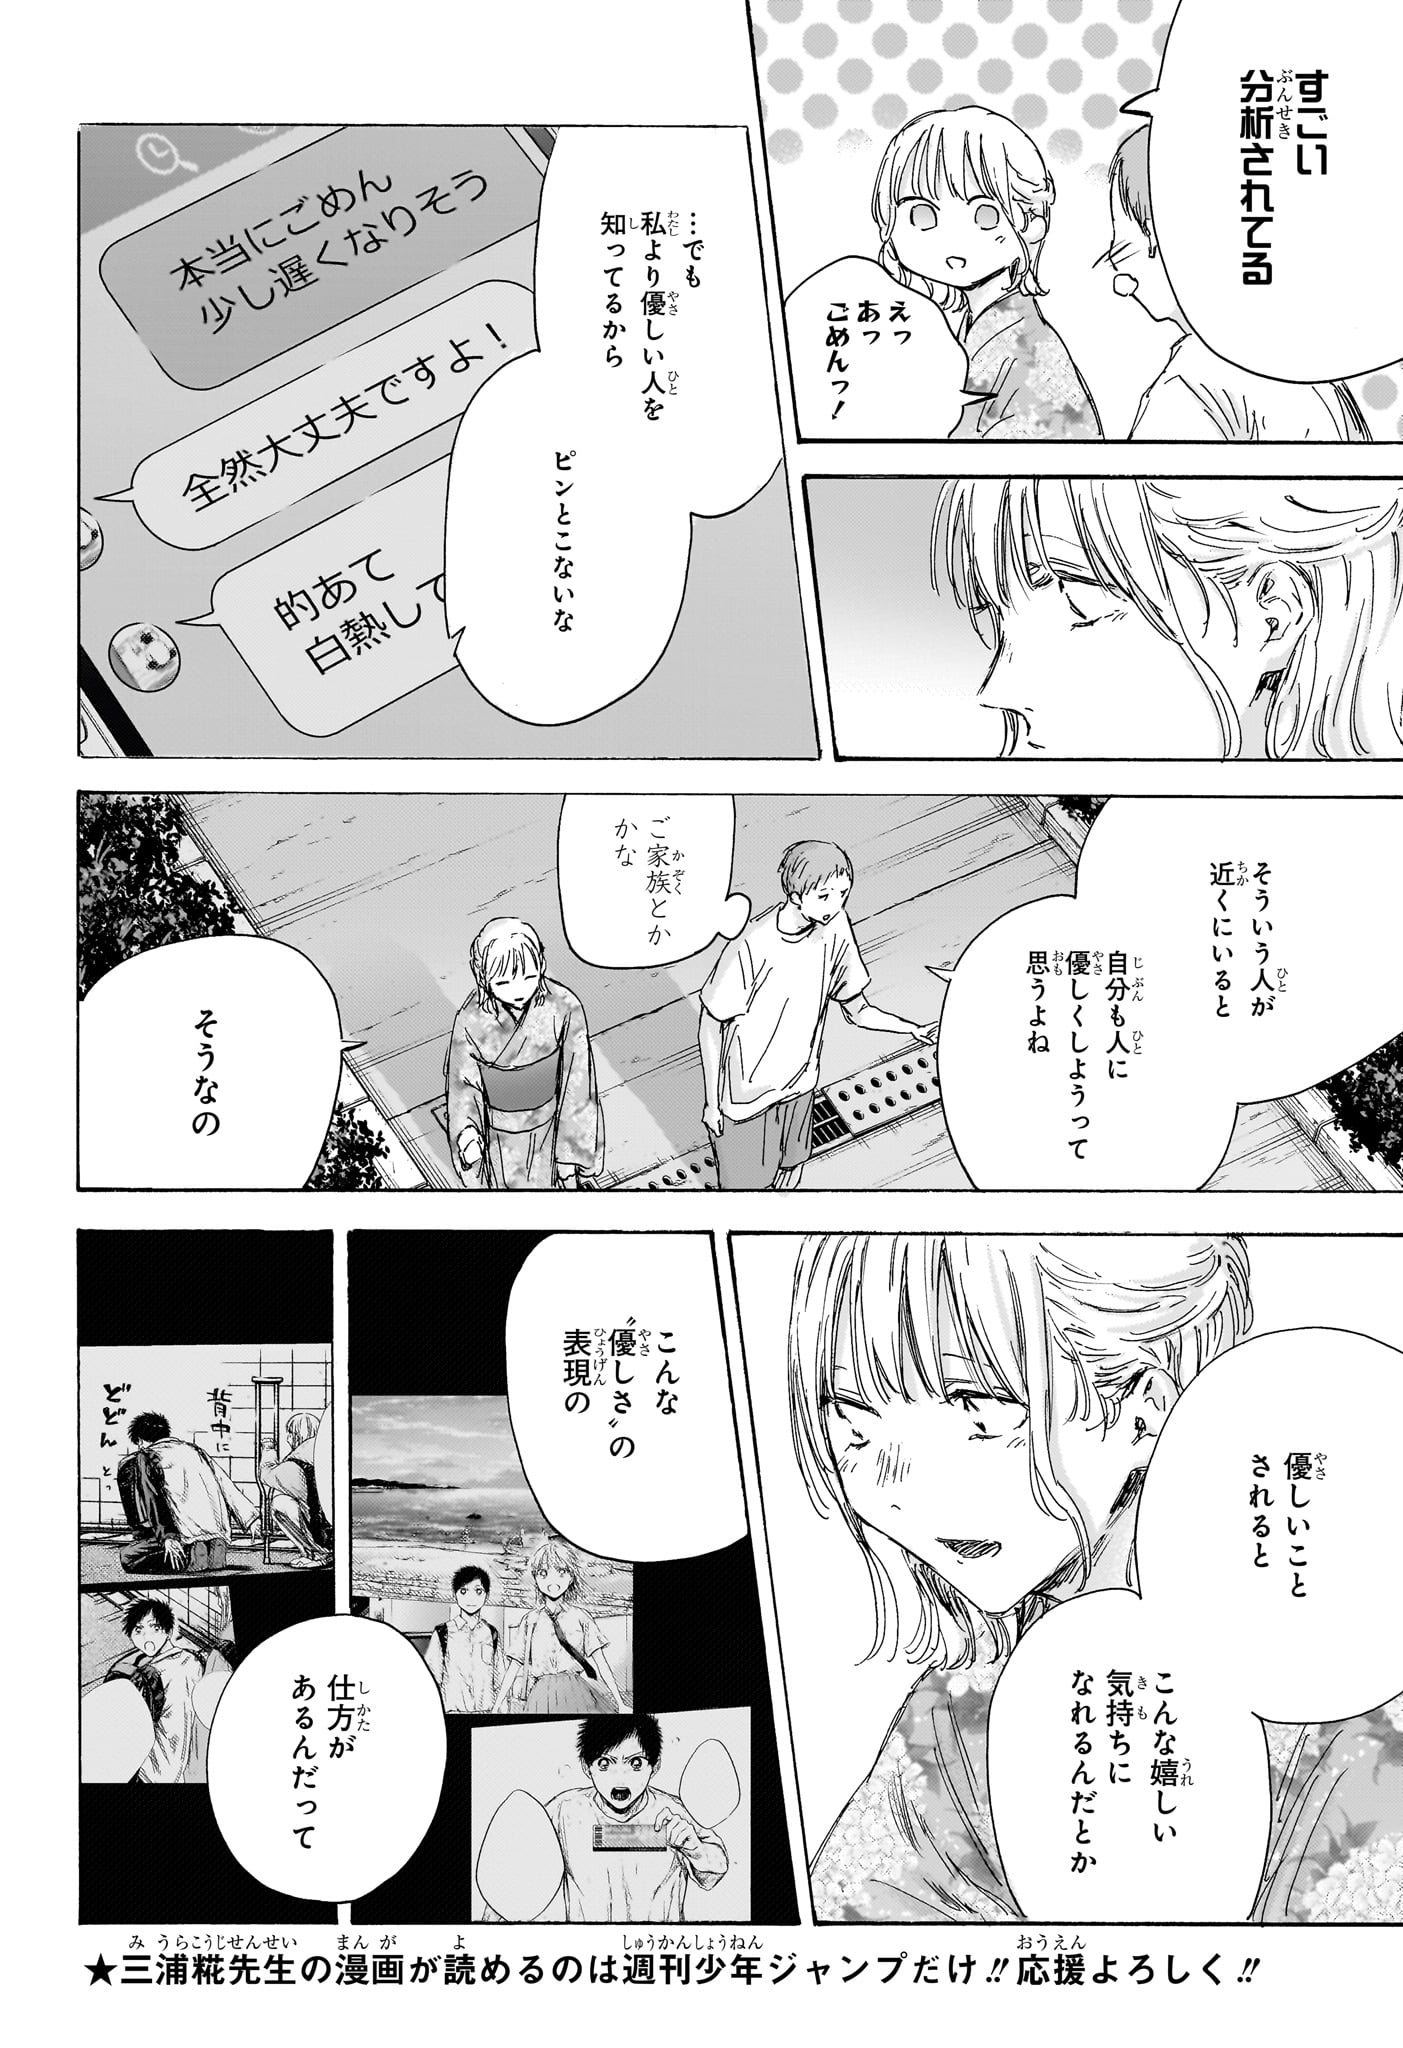 Ao no Hako - Chapter 149 - Page 8